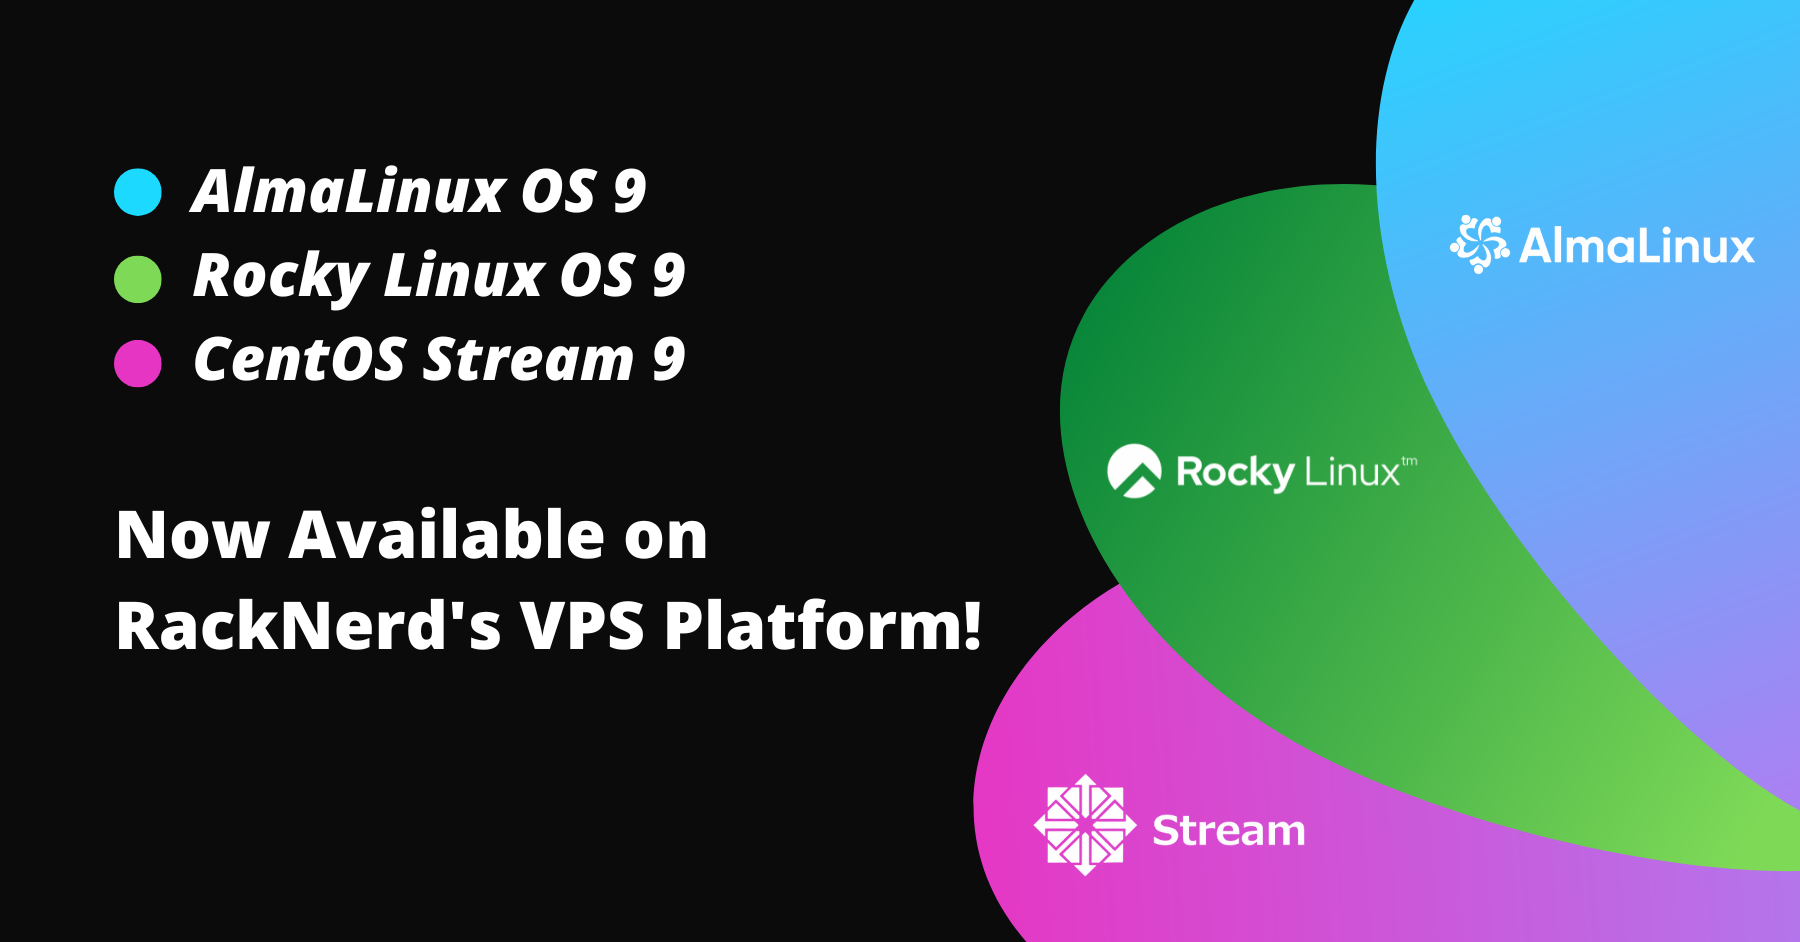 AlmaLinux OS 9, Rocky Linux OS 9, CentOS Stream 9 Now Available on